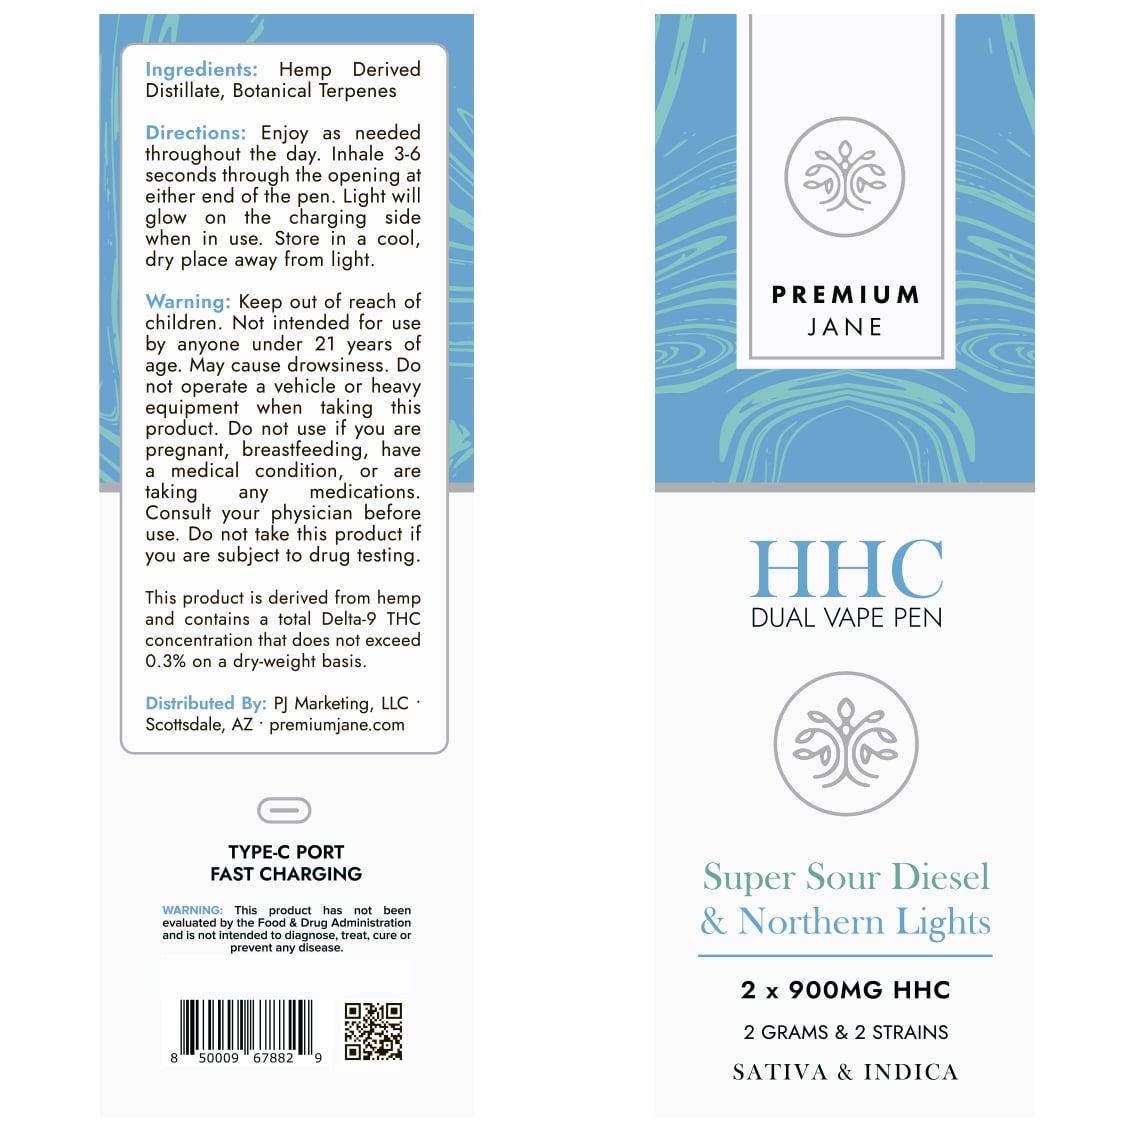 hhc dual vape label - preview